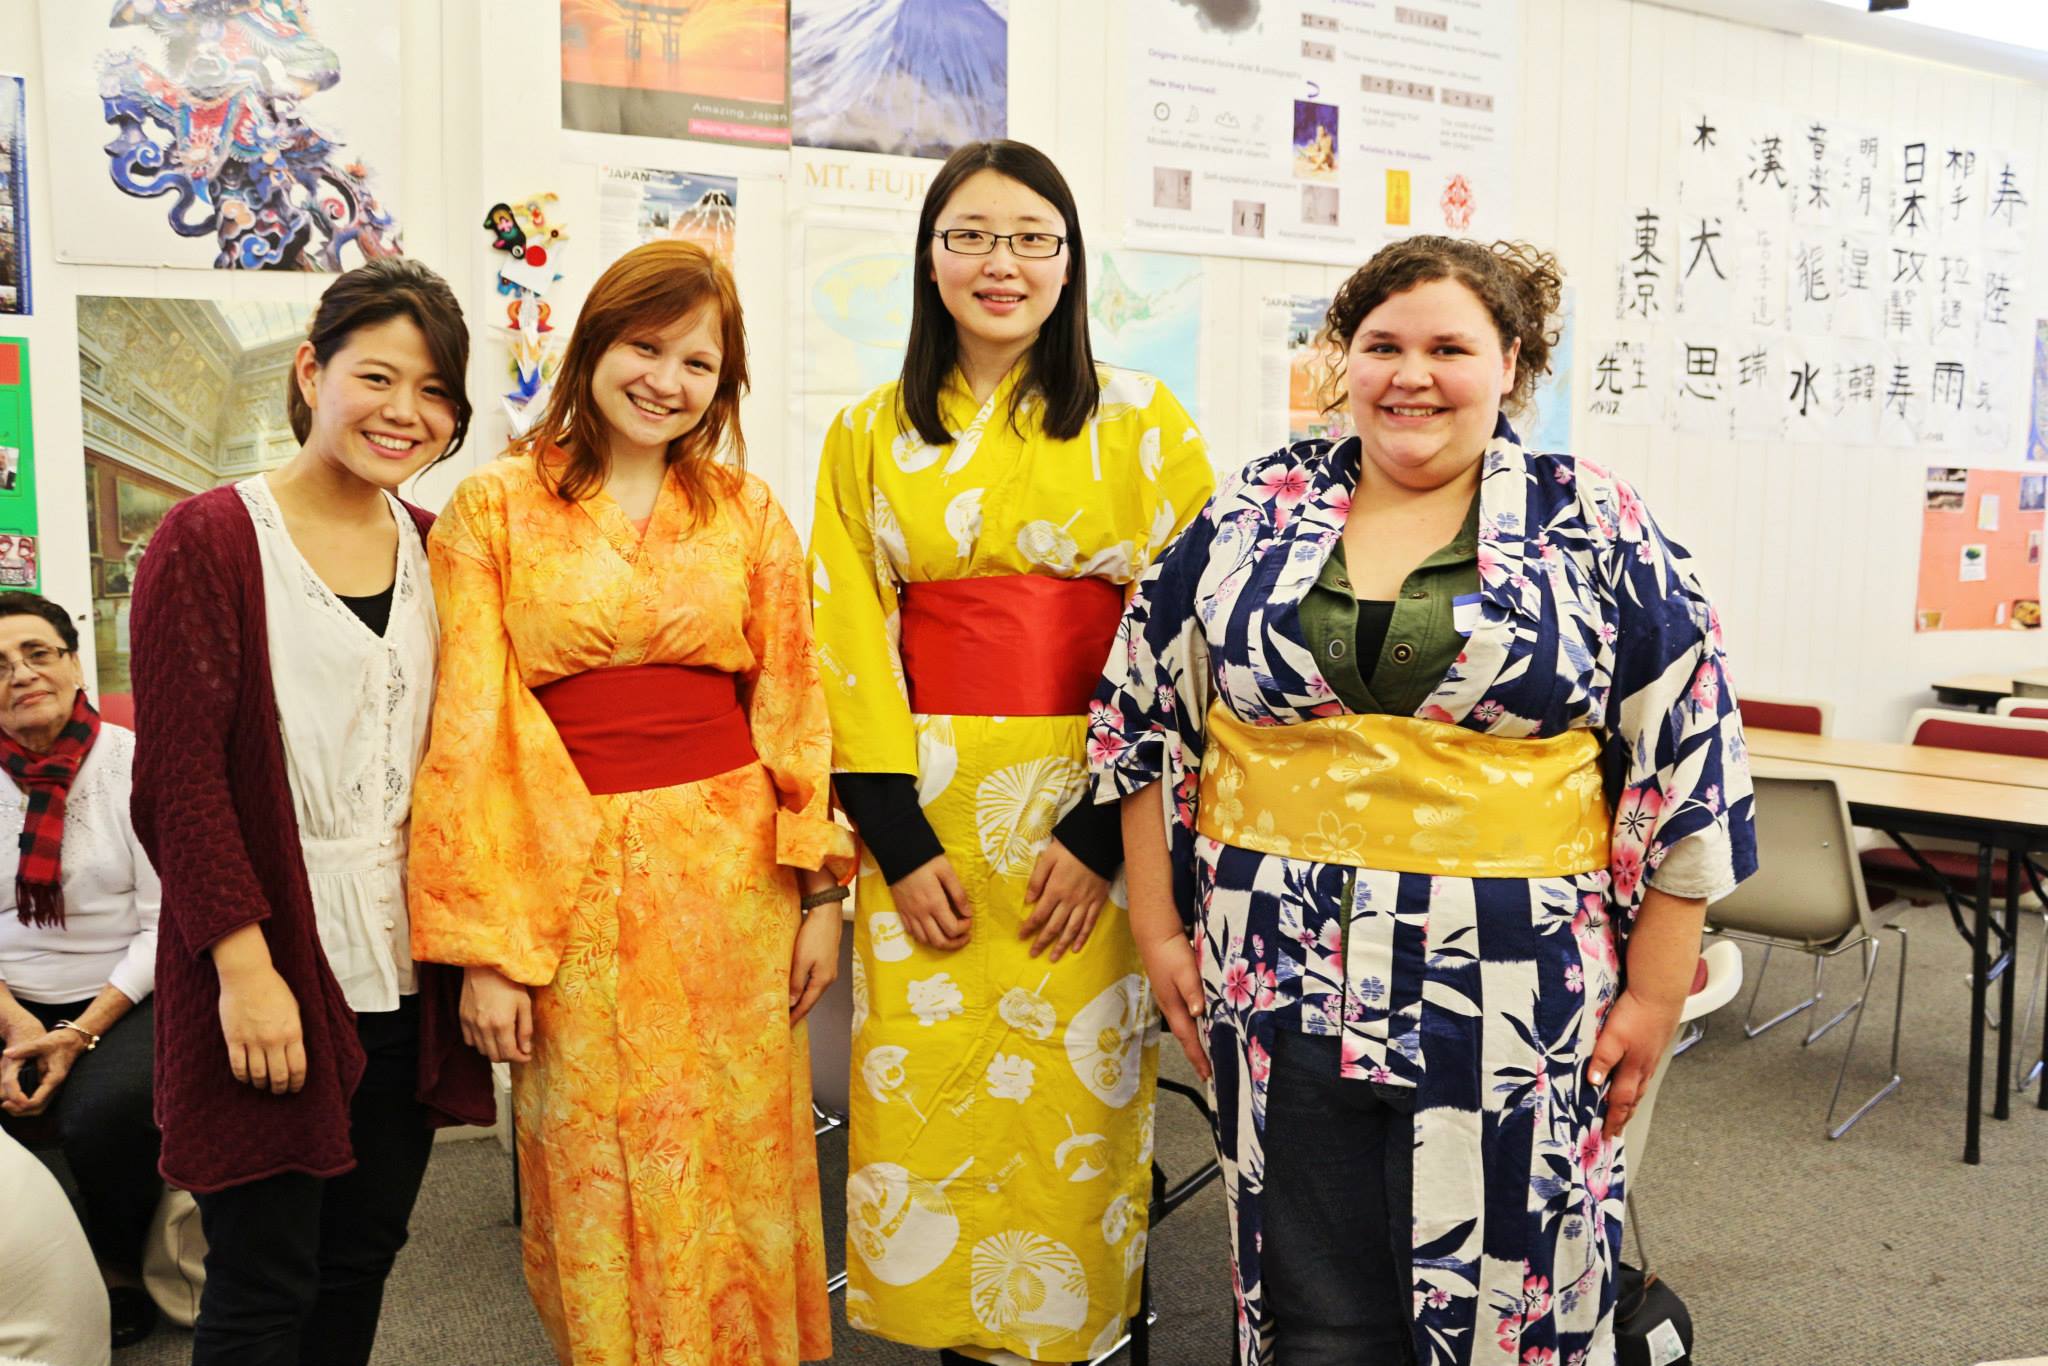 Students in Kimonos